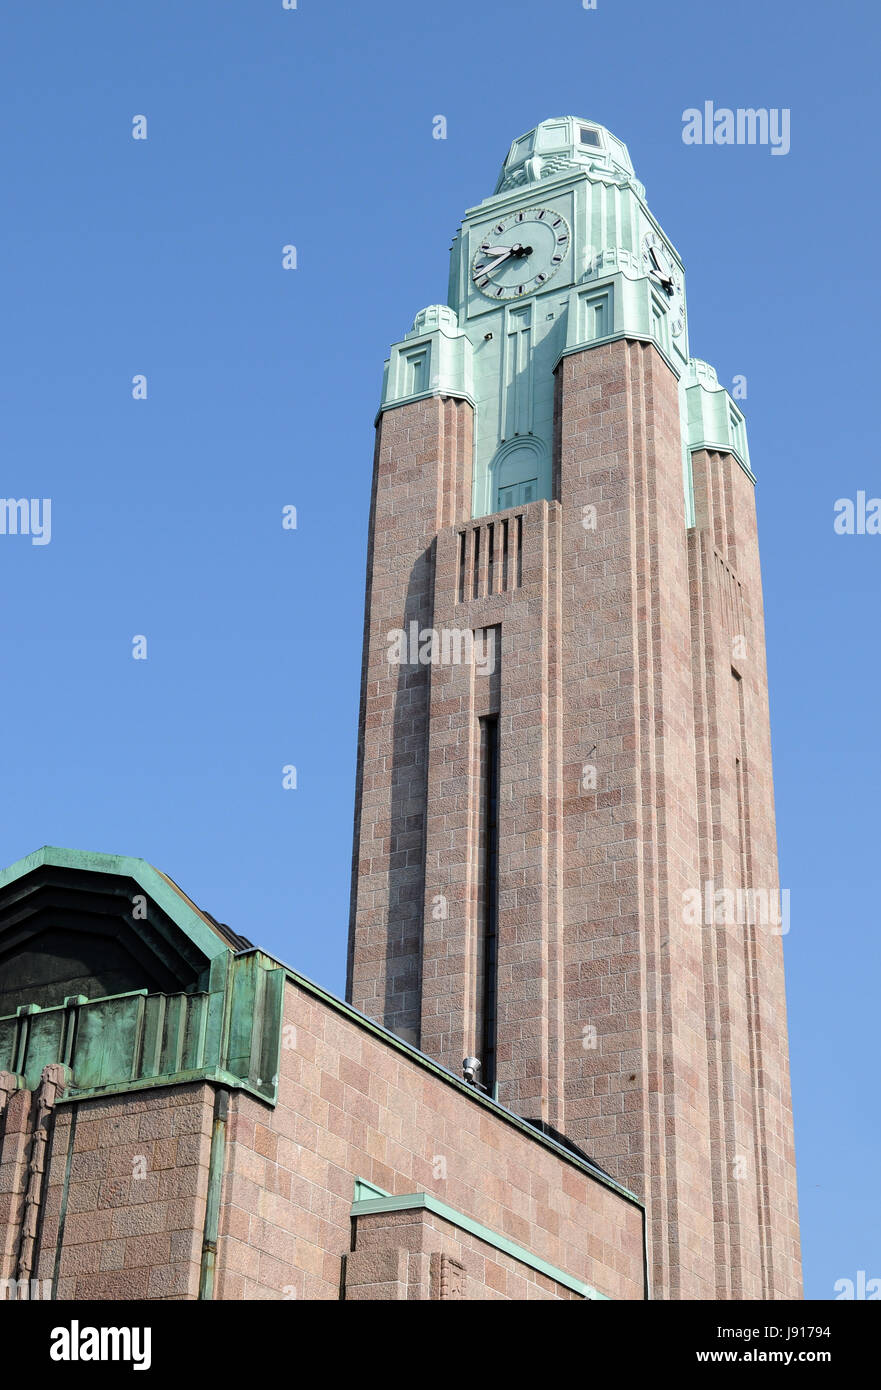 station, tower, finland, helsinki, station, railway, locomotive, train, engine, Stock Photo